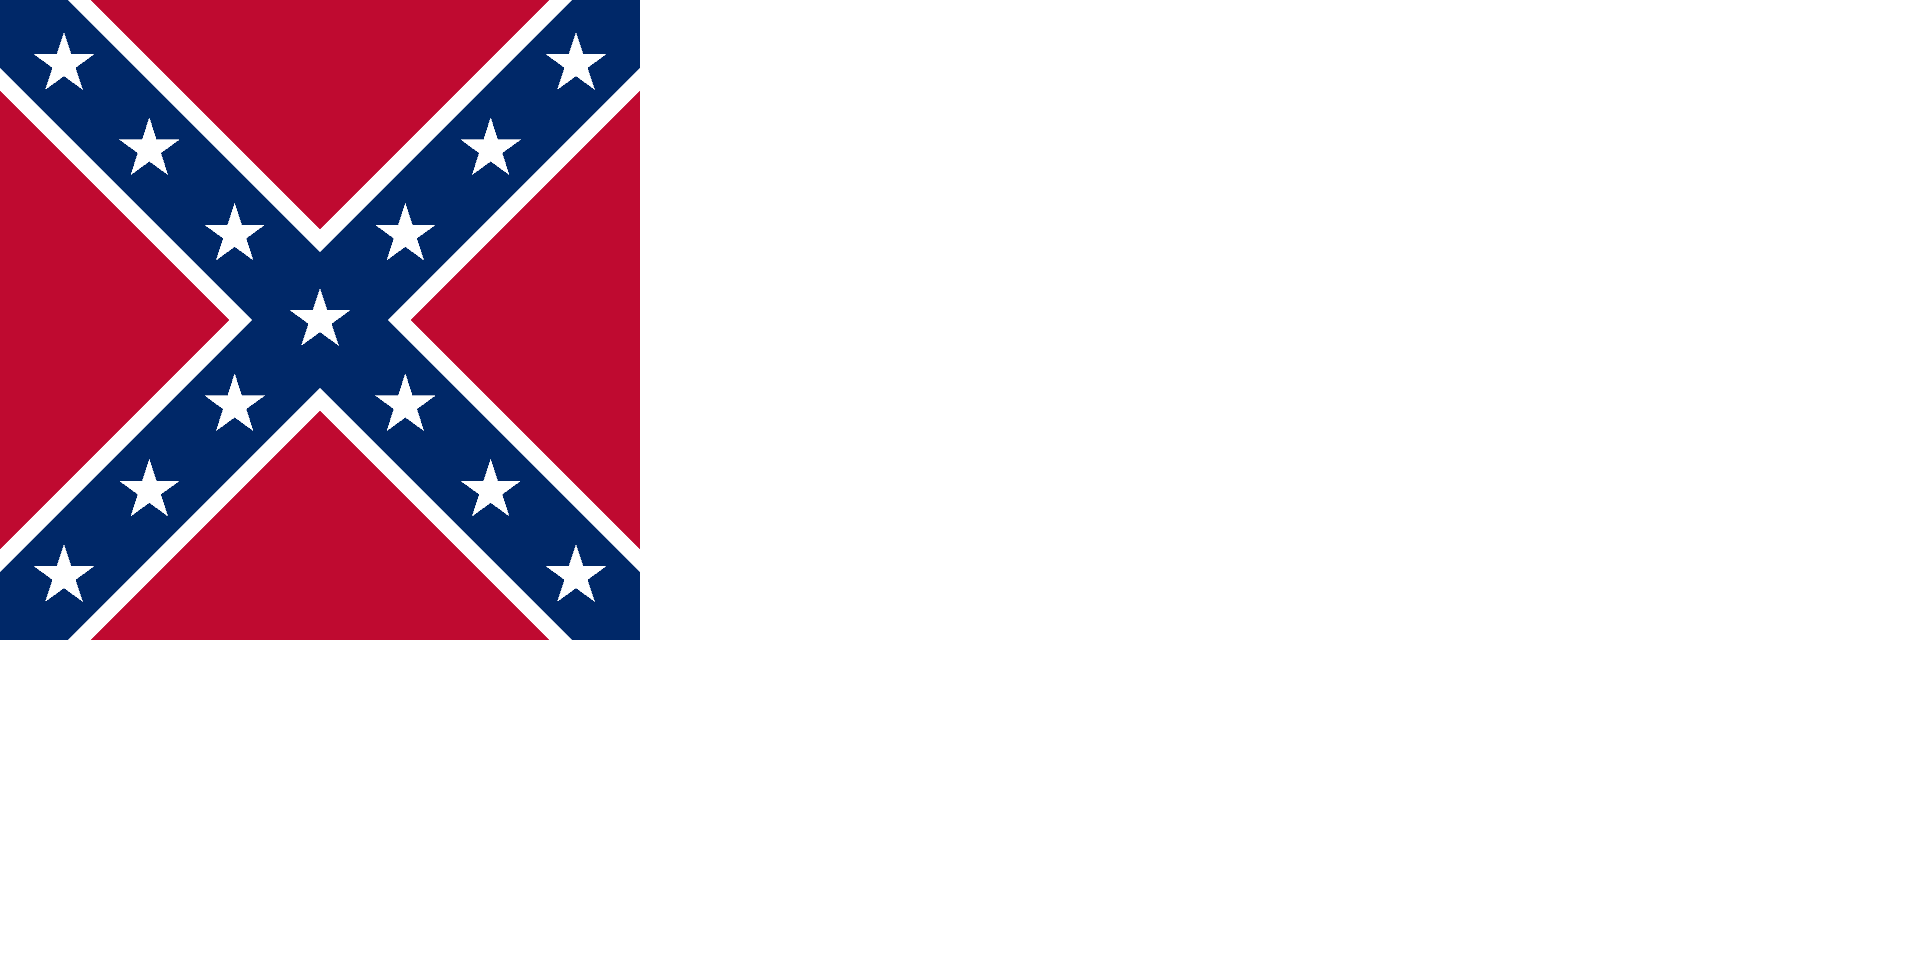 Version of confederate flag